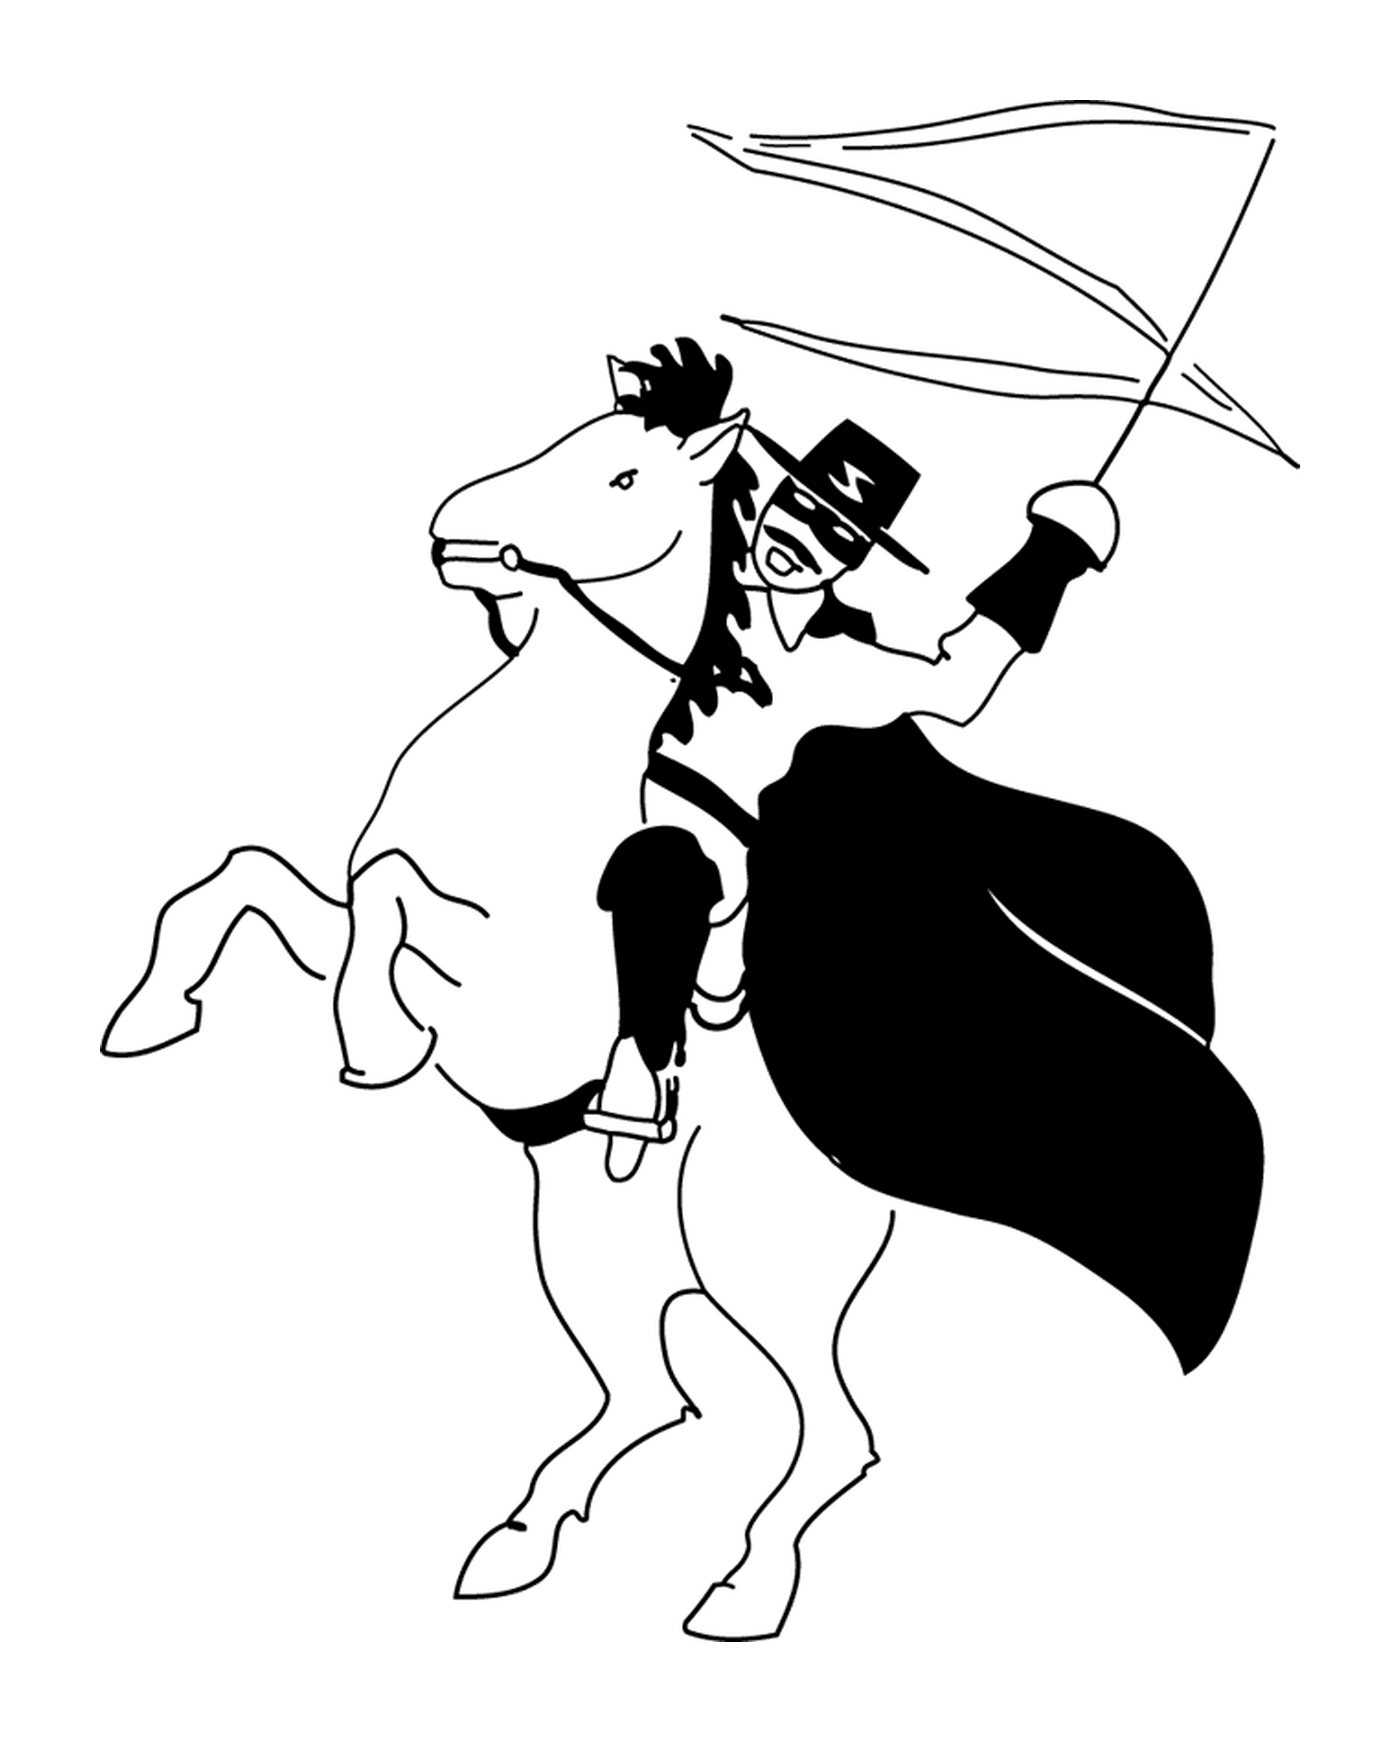  Zorro on his horse Tornado 